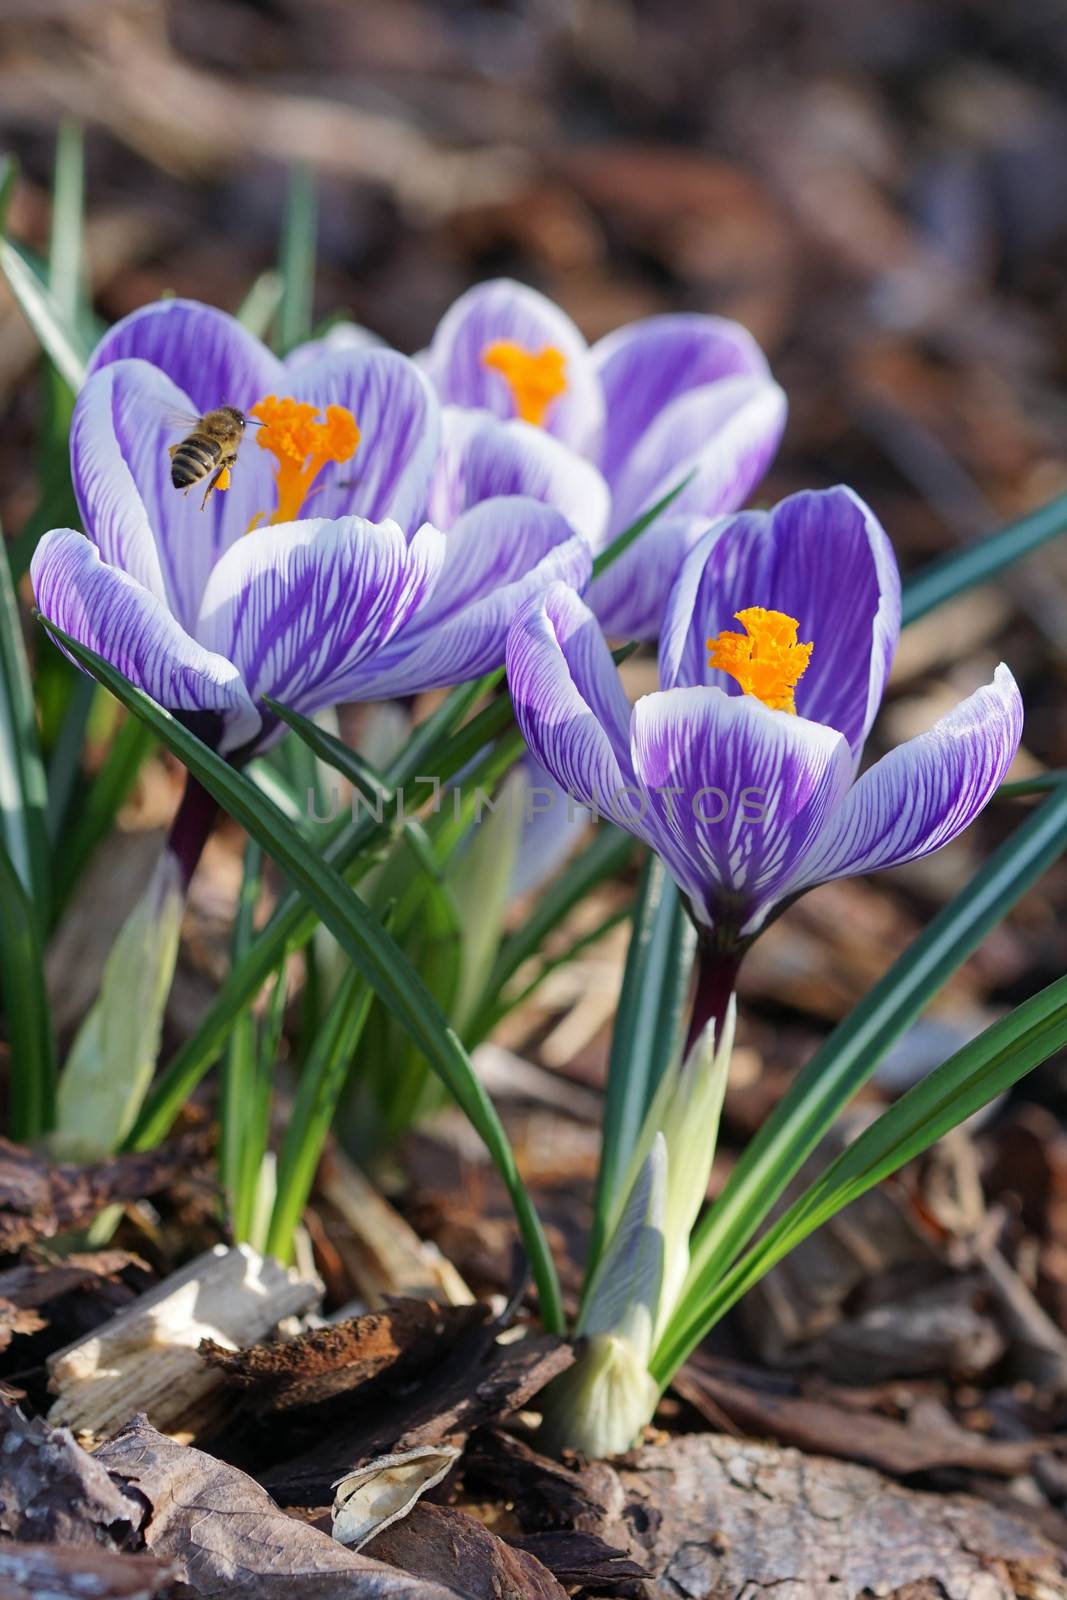 Crocus, flowers of the spring